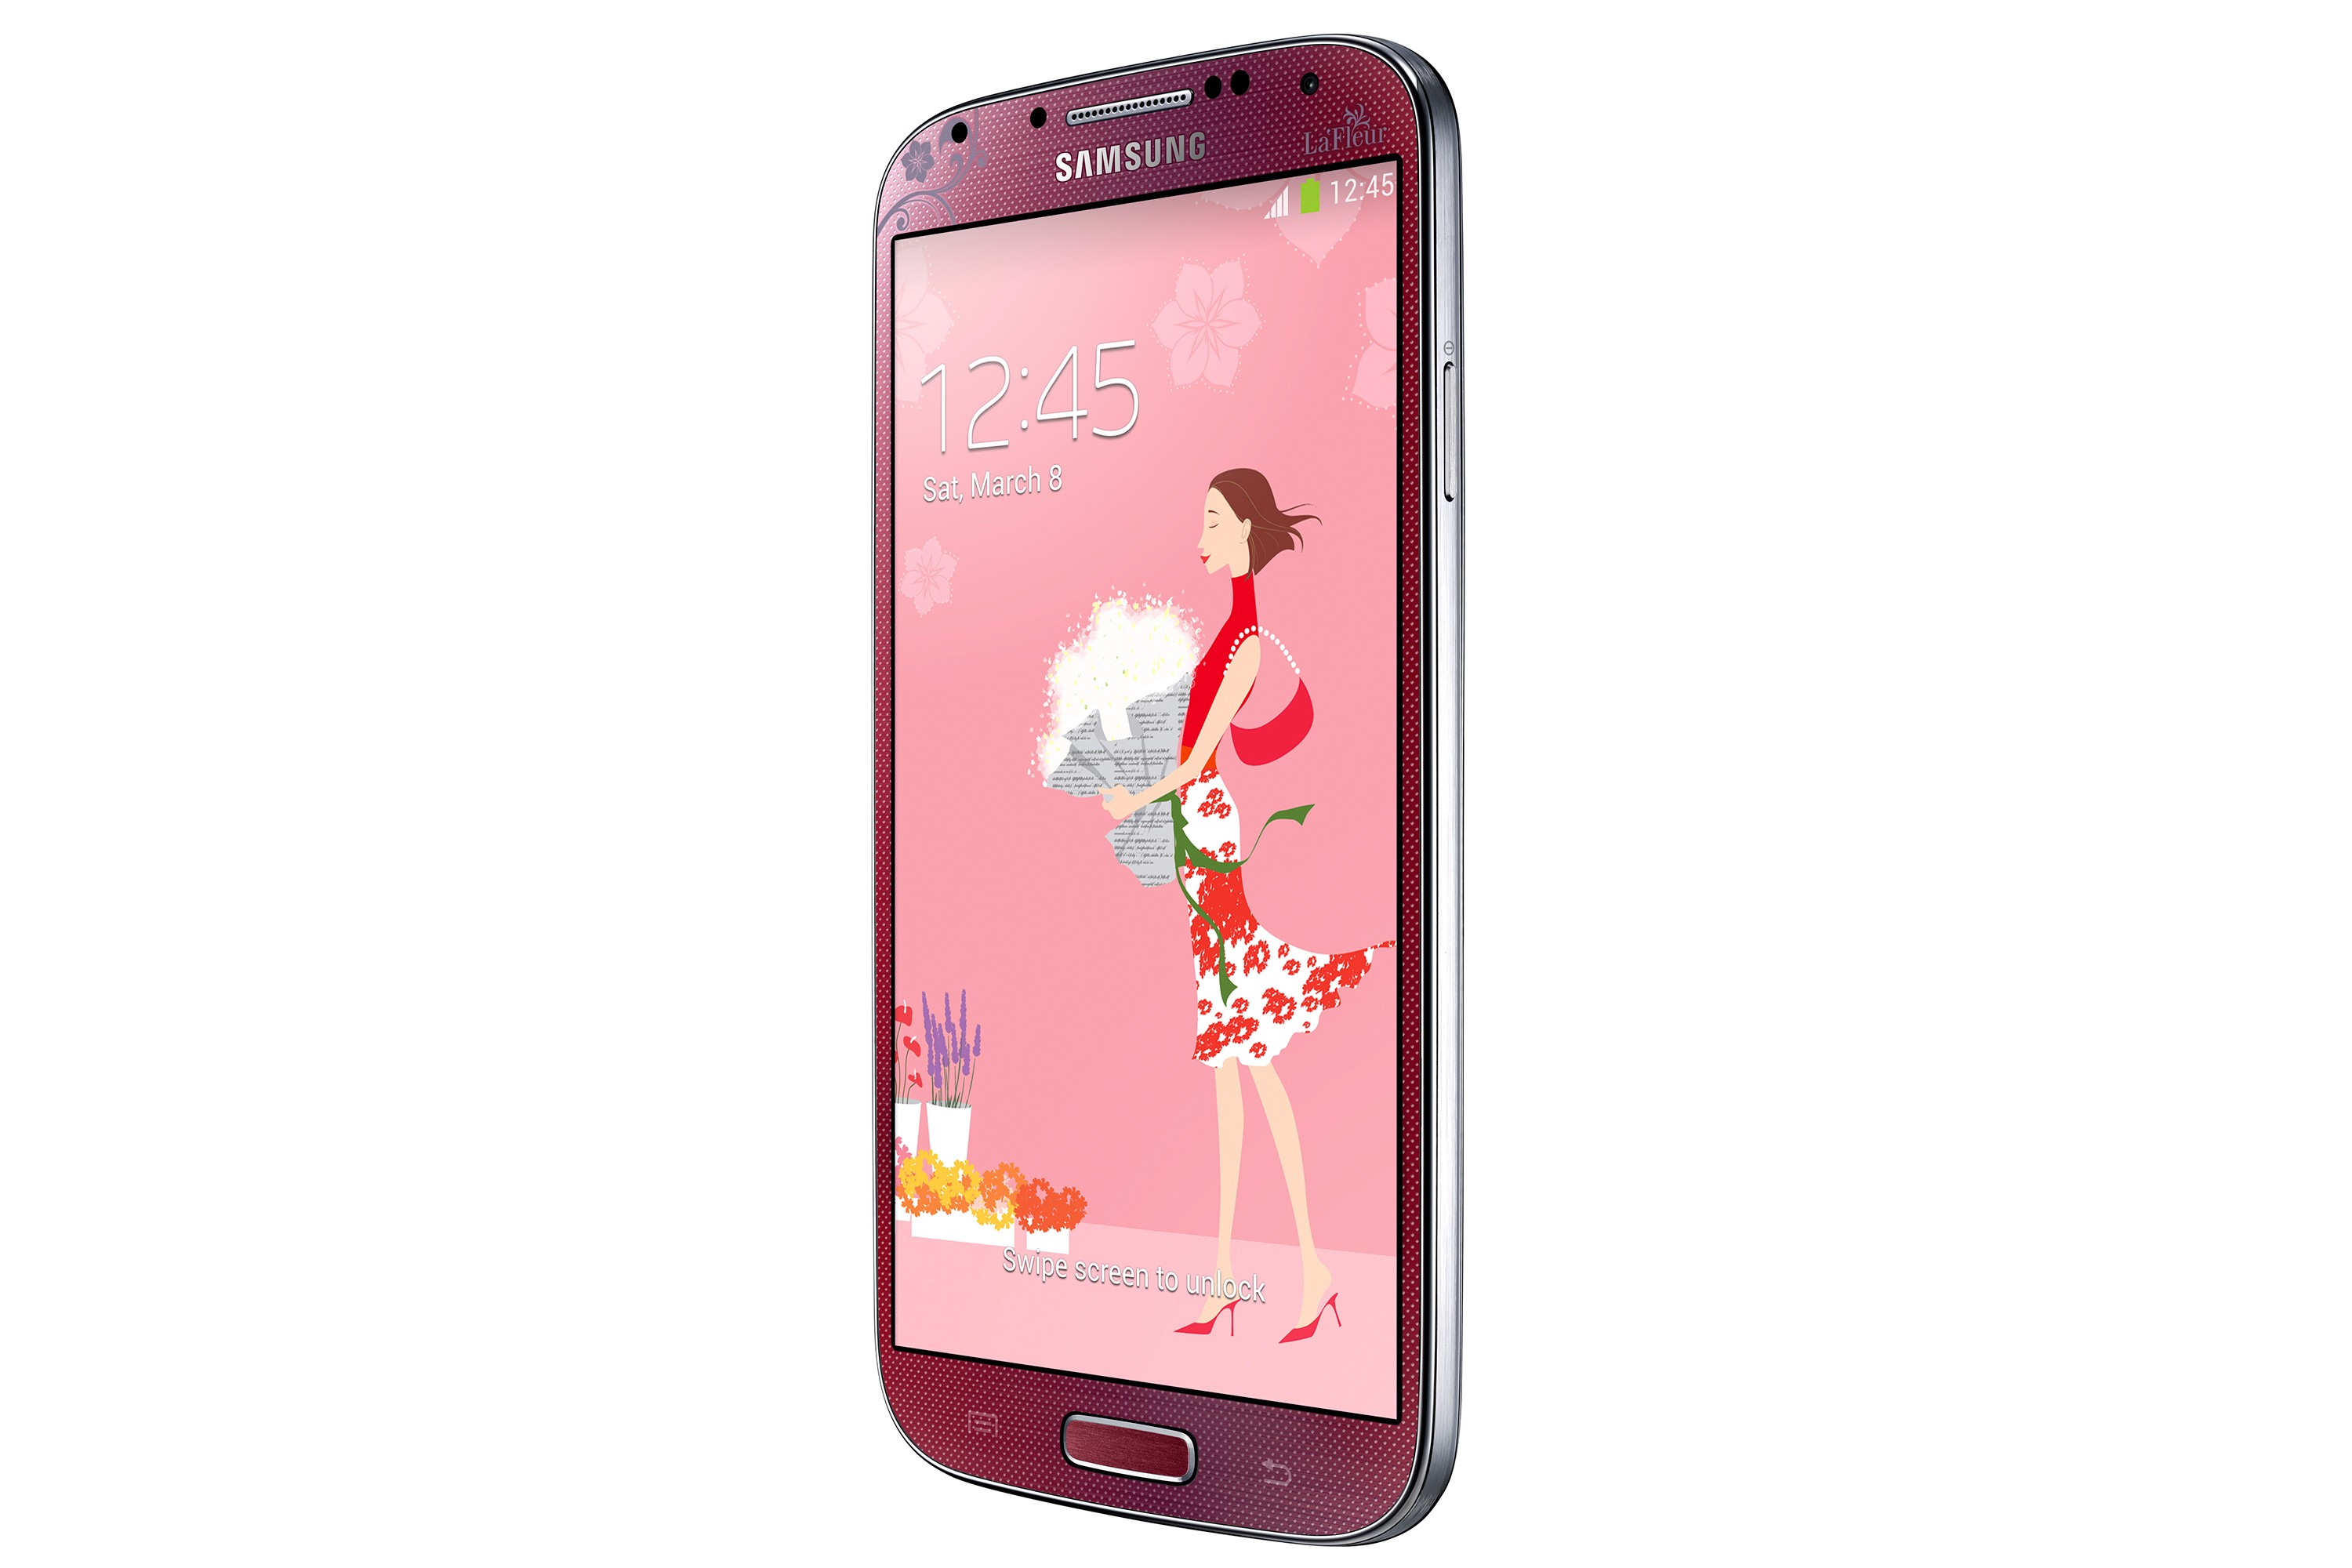 Самсунг la fleur. Samsung la'fleur. Samsung la fleur сенсорный белый. Смартфон Samsung Galaxy s4 Mini la fleur 2014. Samsung la fleur gt-s5230 белый.